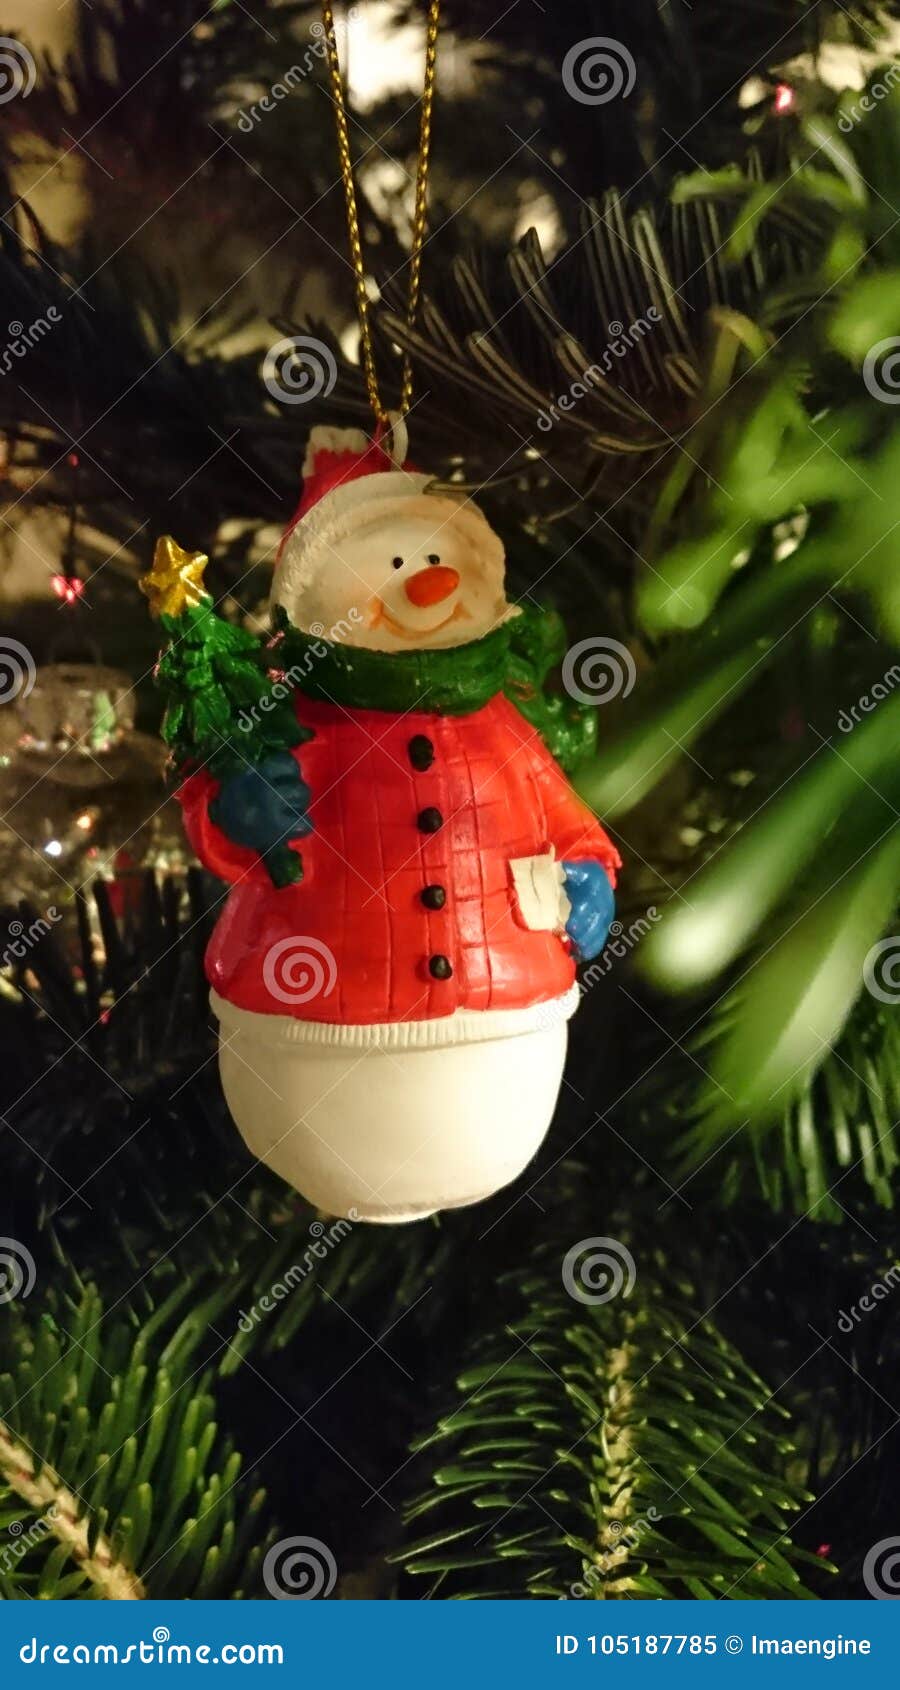 Jolly Christmas - Santa Claus, Snow Man, Christmas Trees, Rudolph